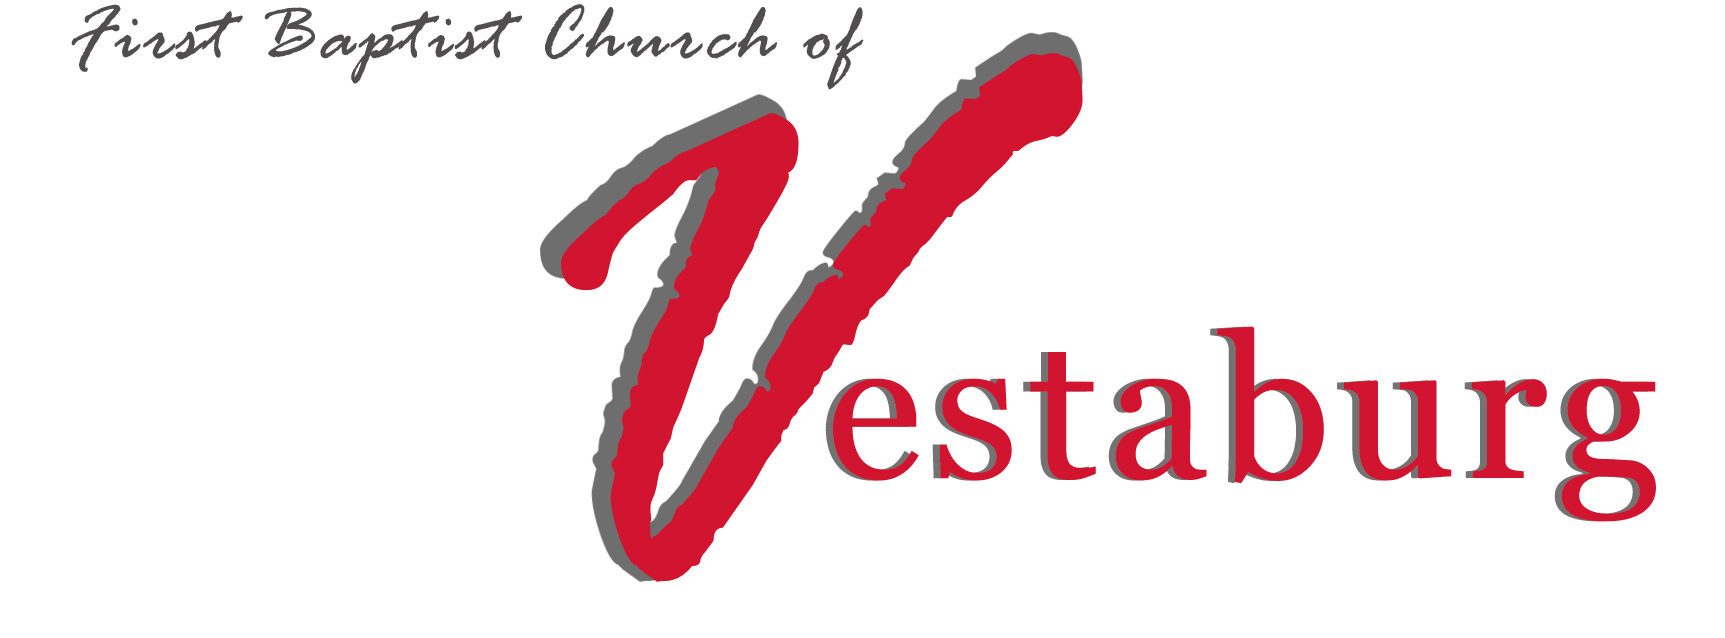 First Baptist Church of Vestaburg